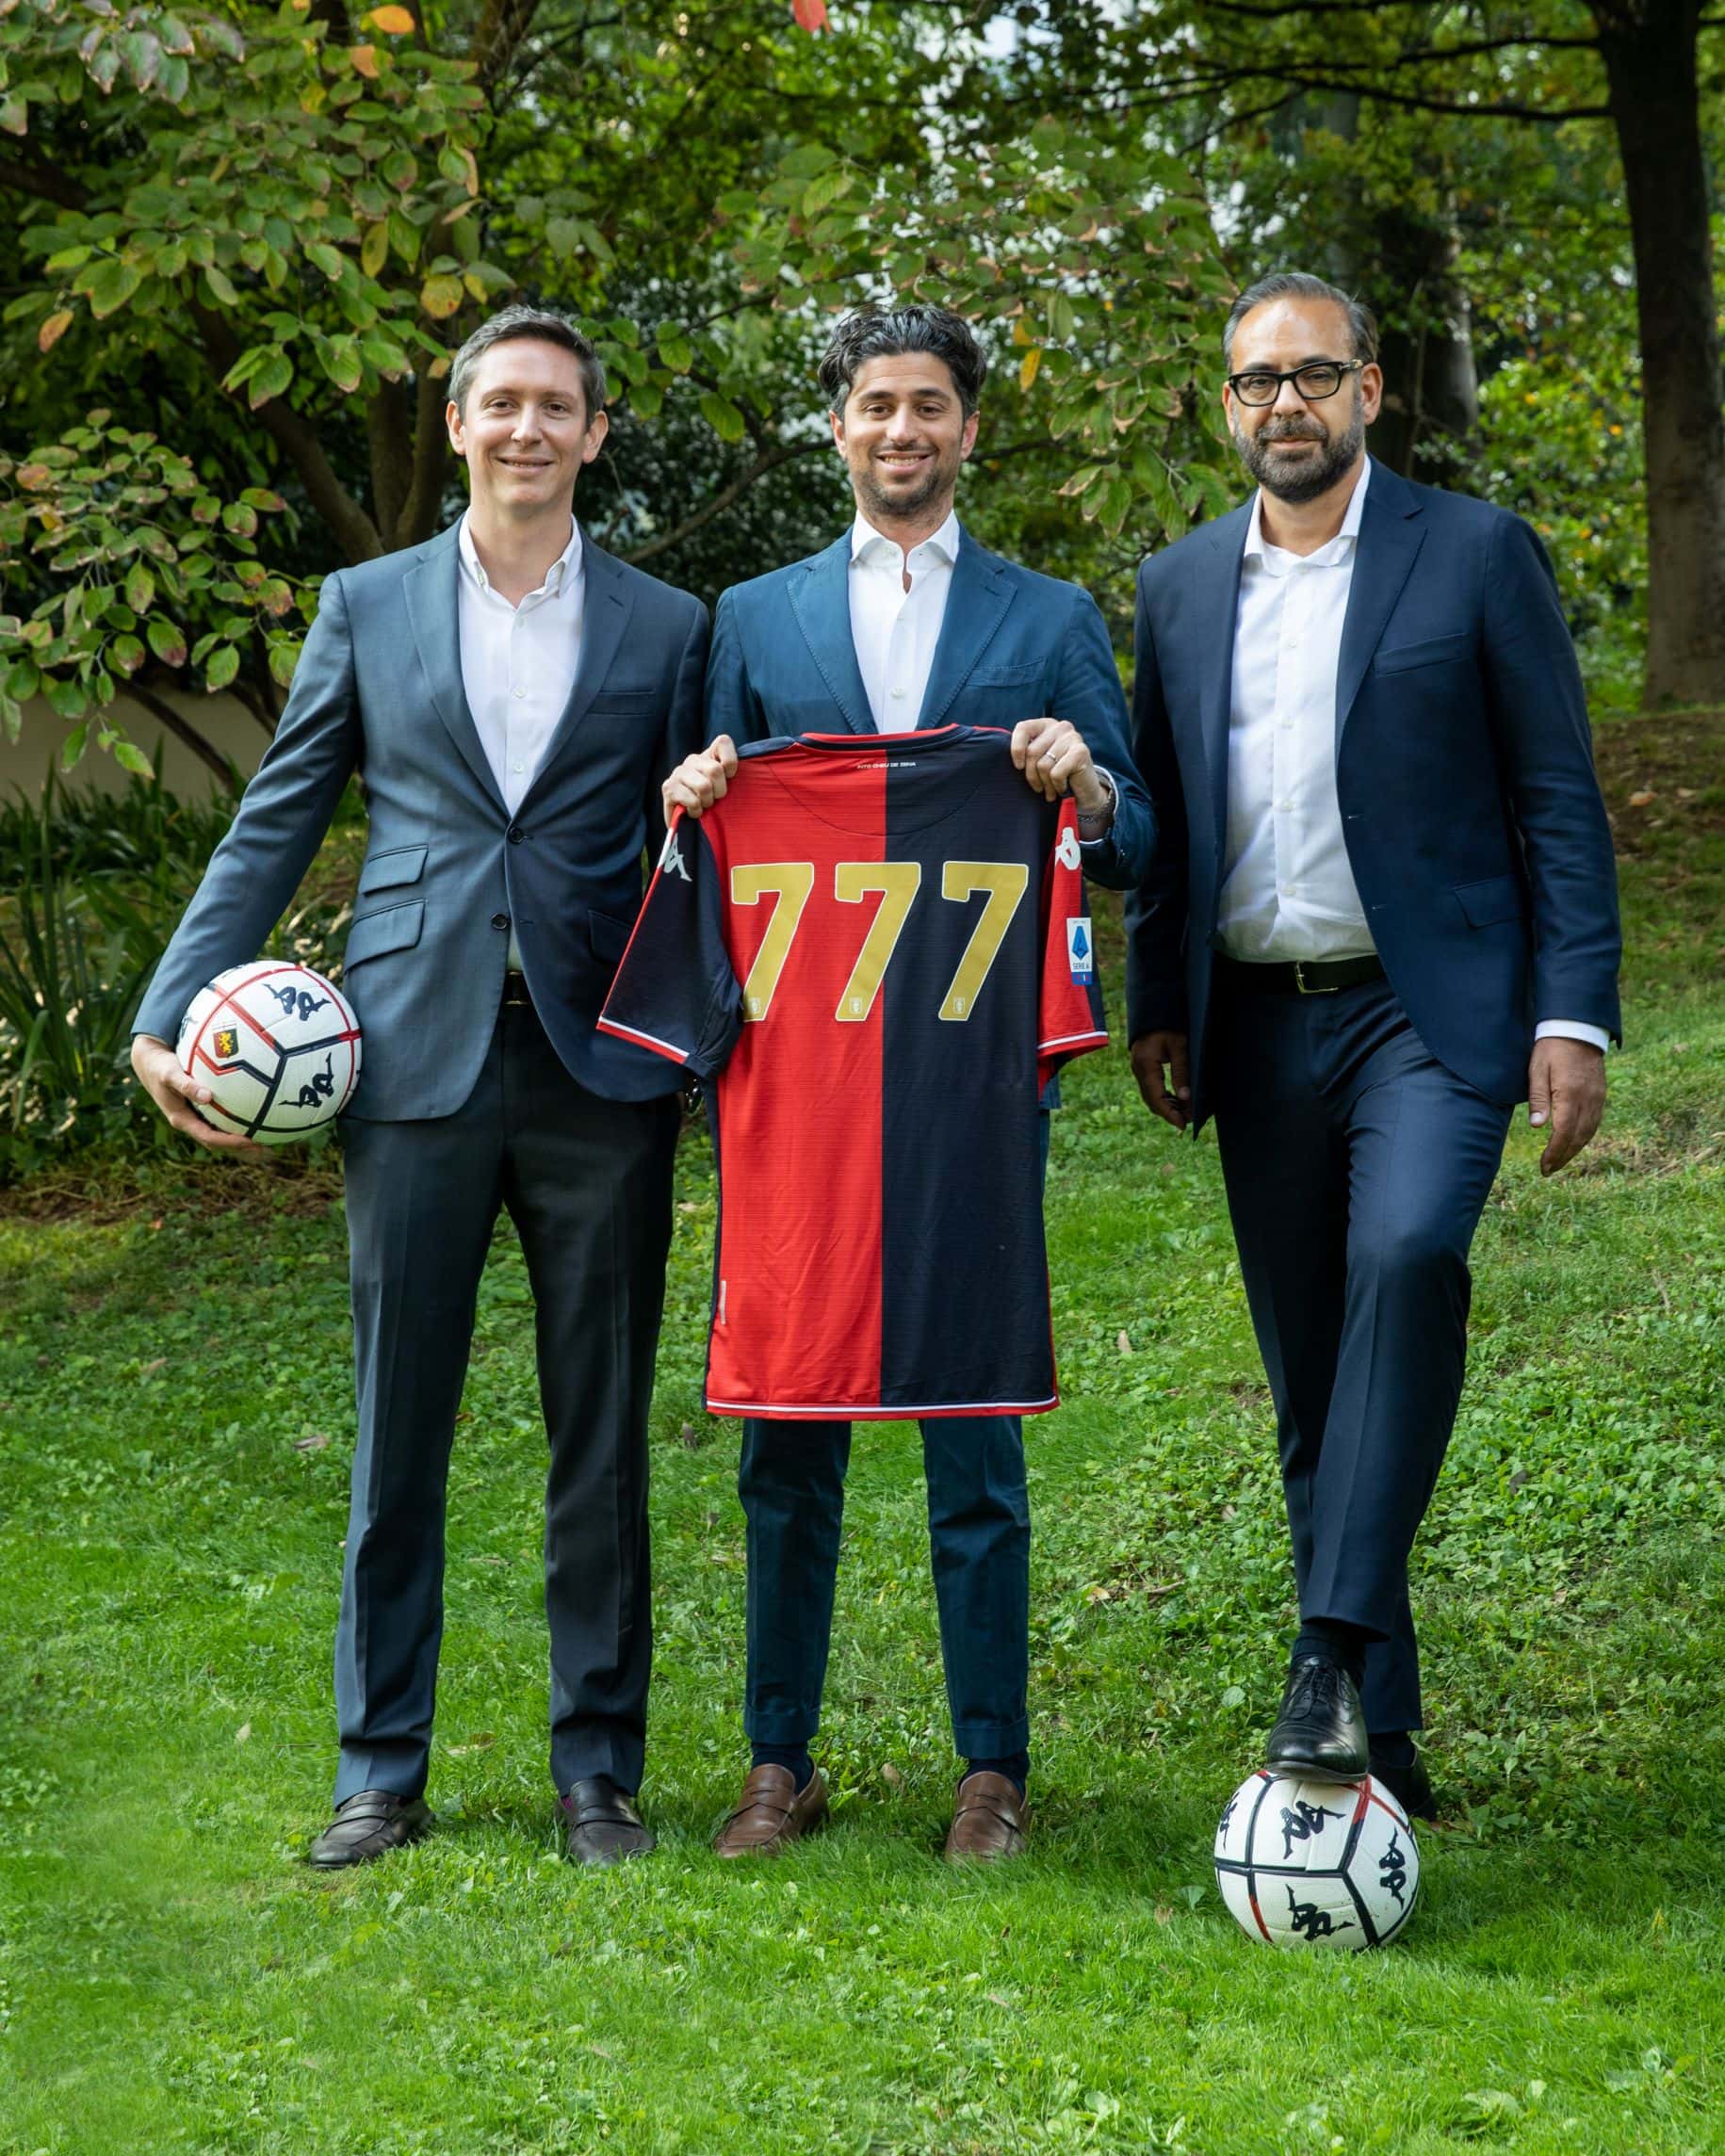 Genoa, Italy. 24 April 2022. Players of Genoa CFC celebrate the